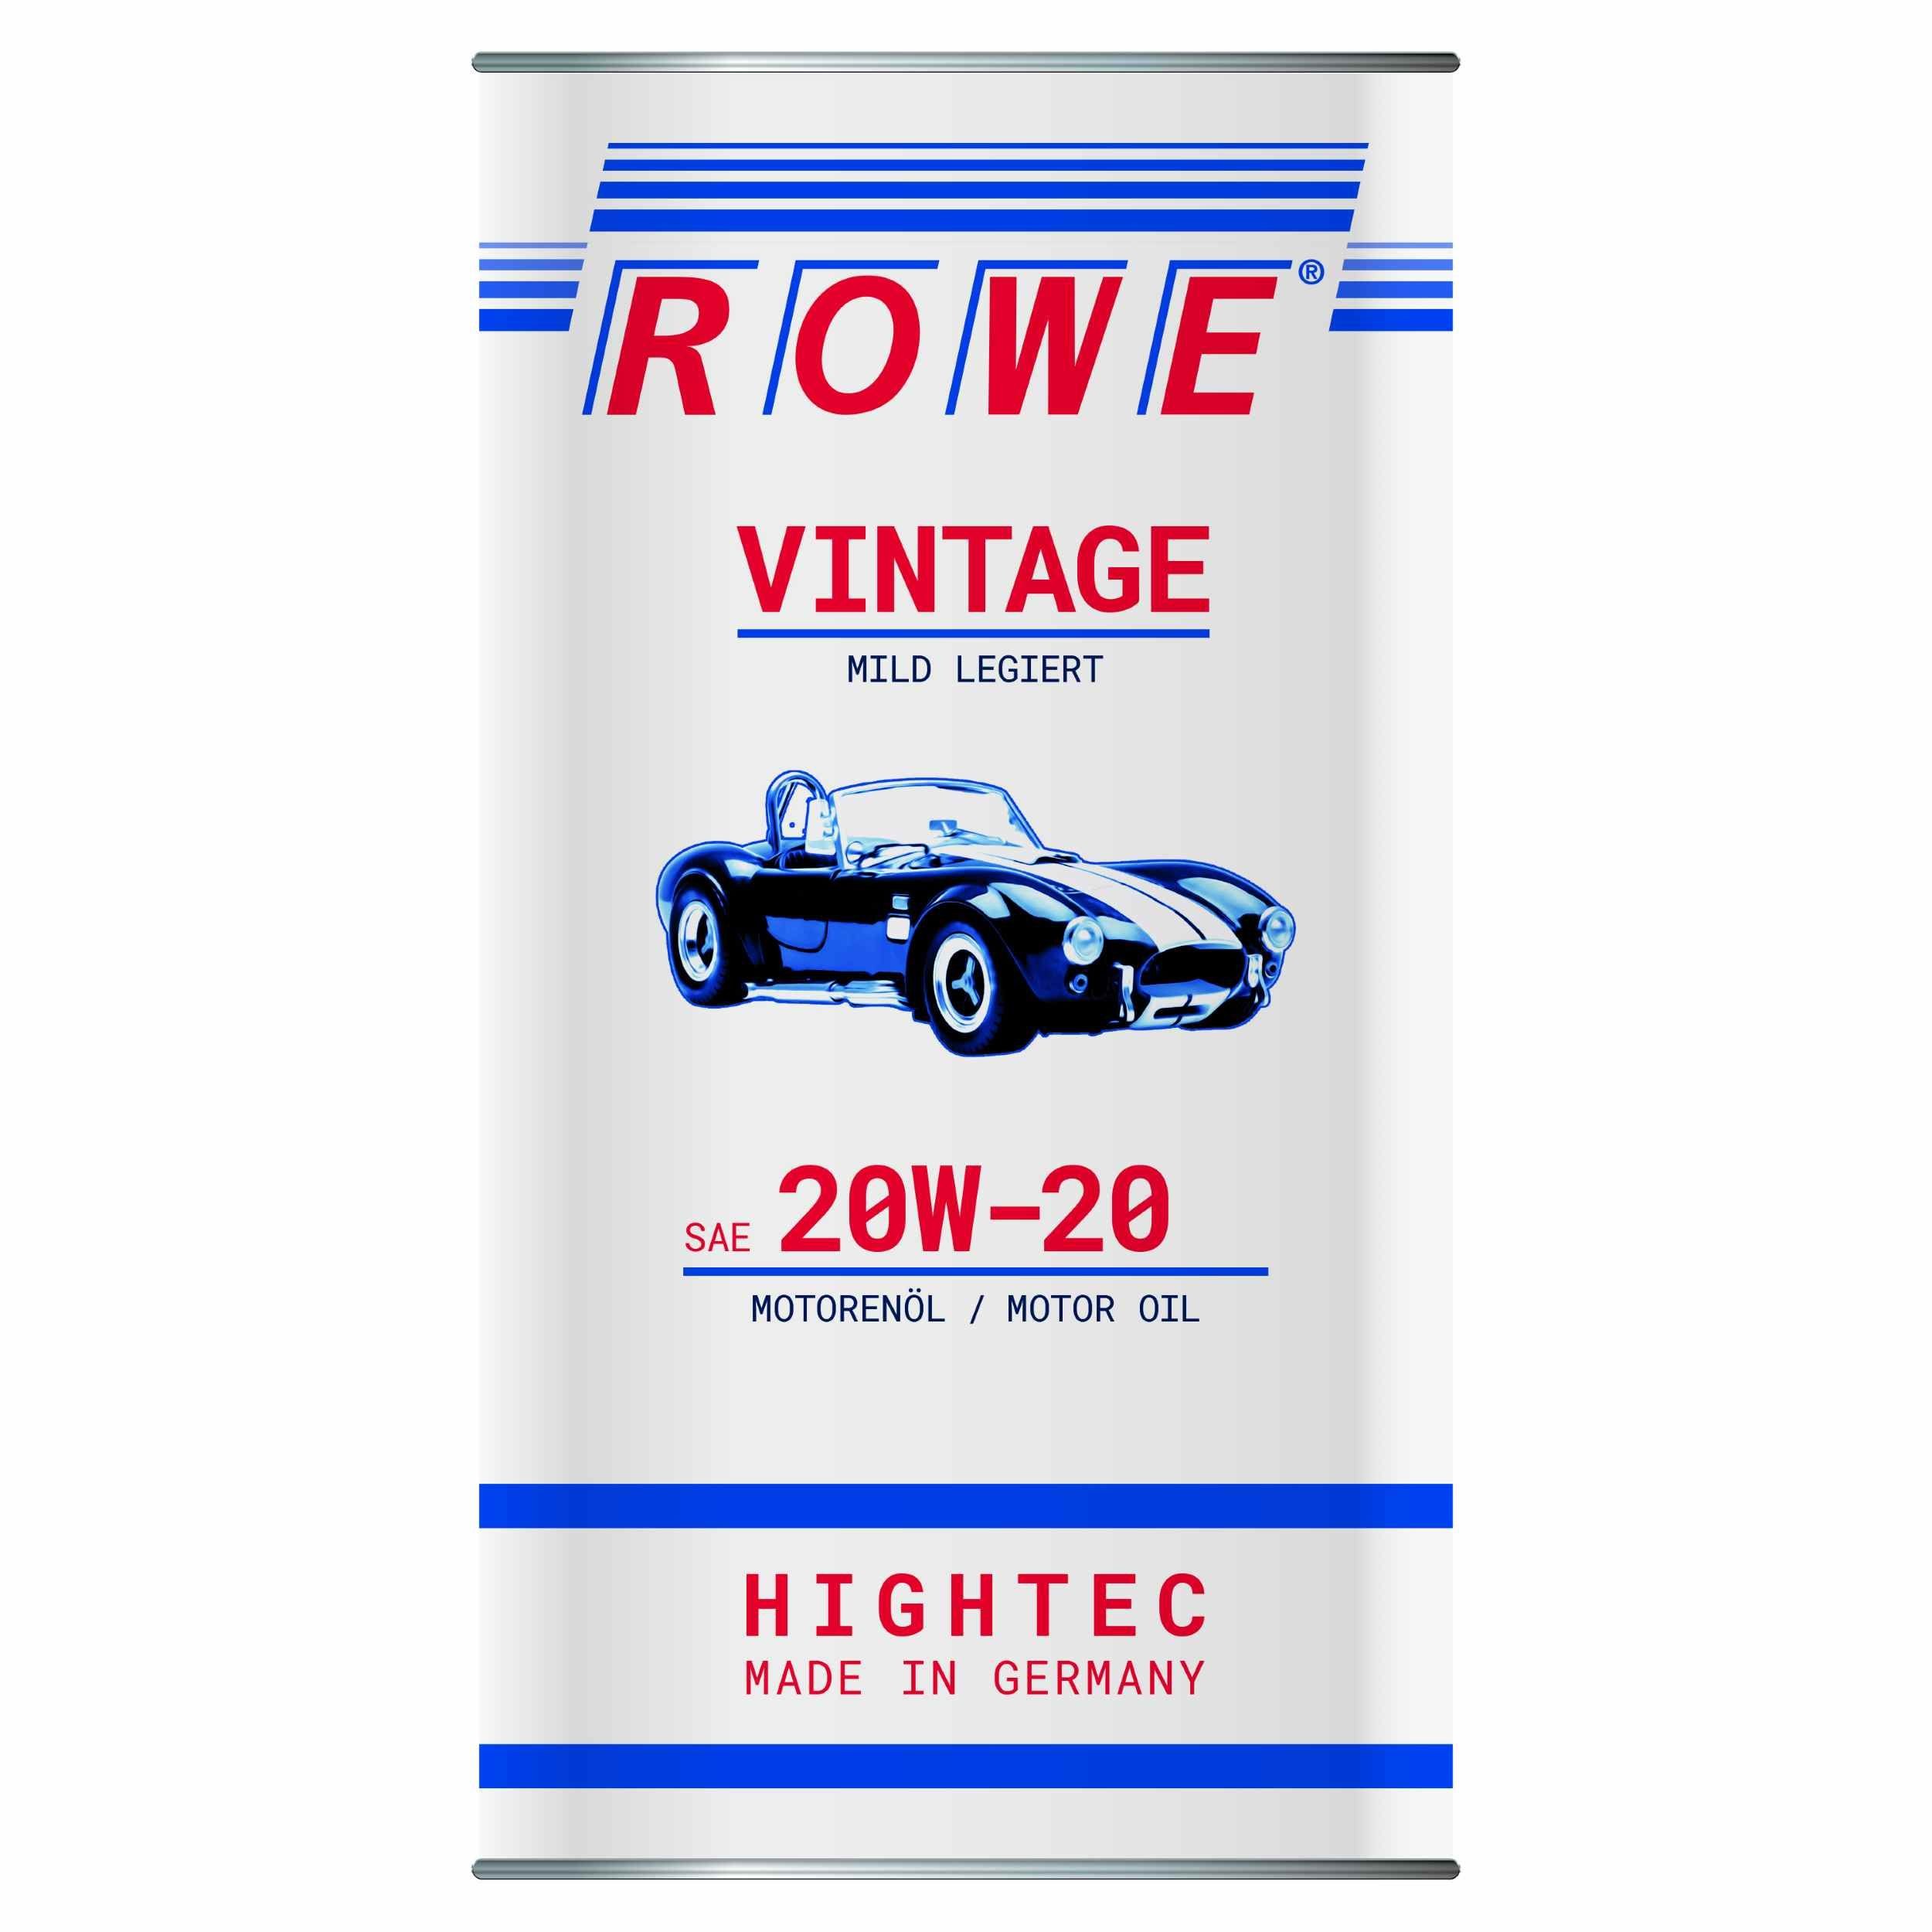 ROWE HIGHTEC VINTAGE, MILD LEGIERT 20223-0050-99 Engine oil 20W-20, 5l, Mineral Oil